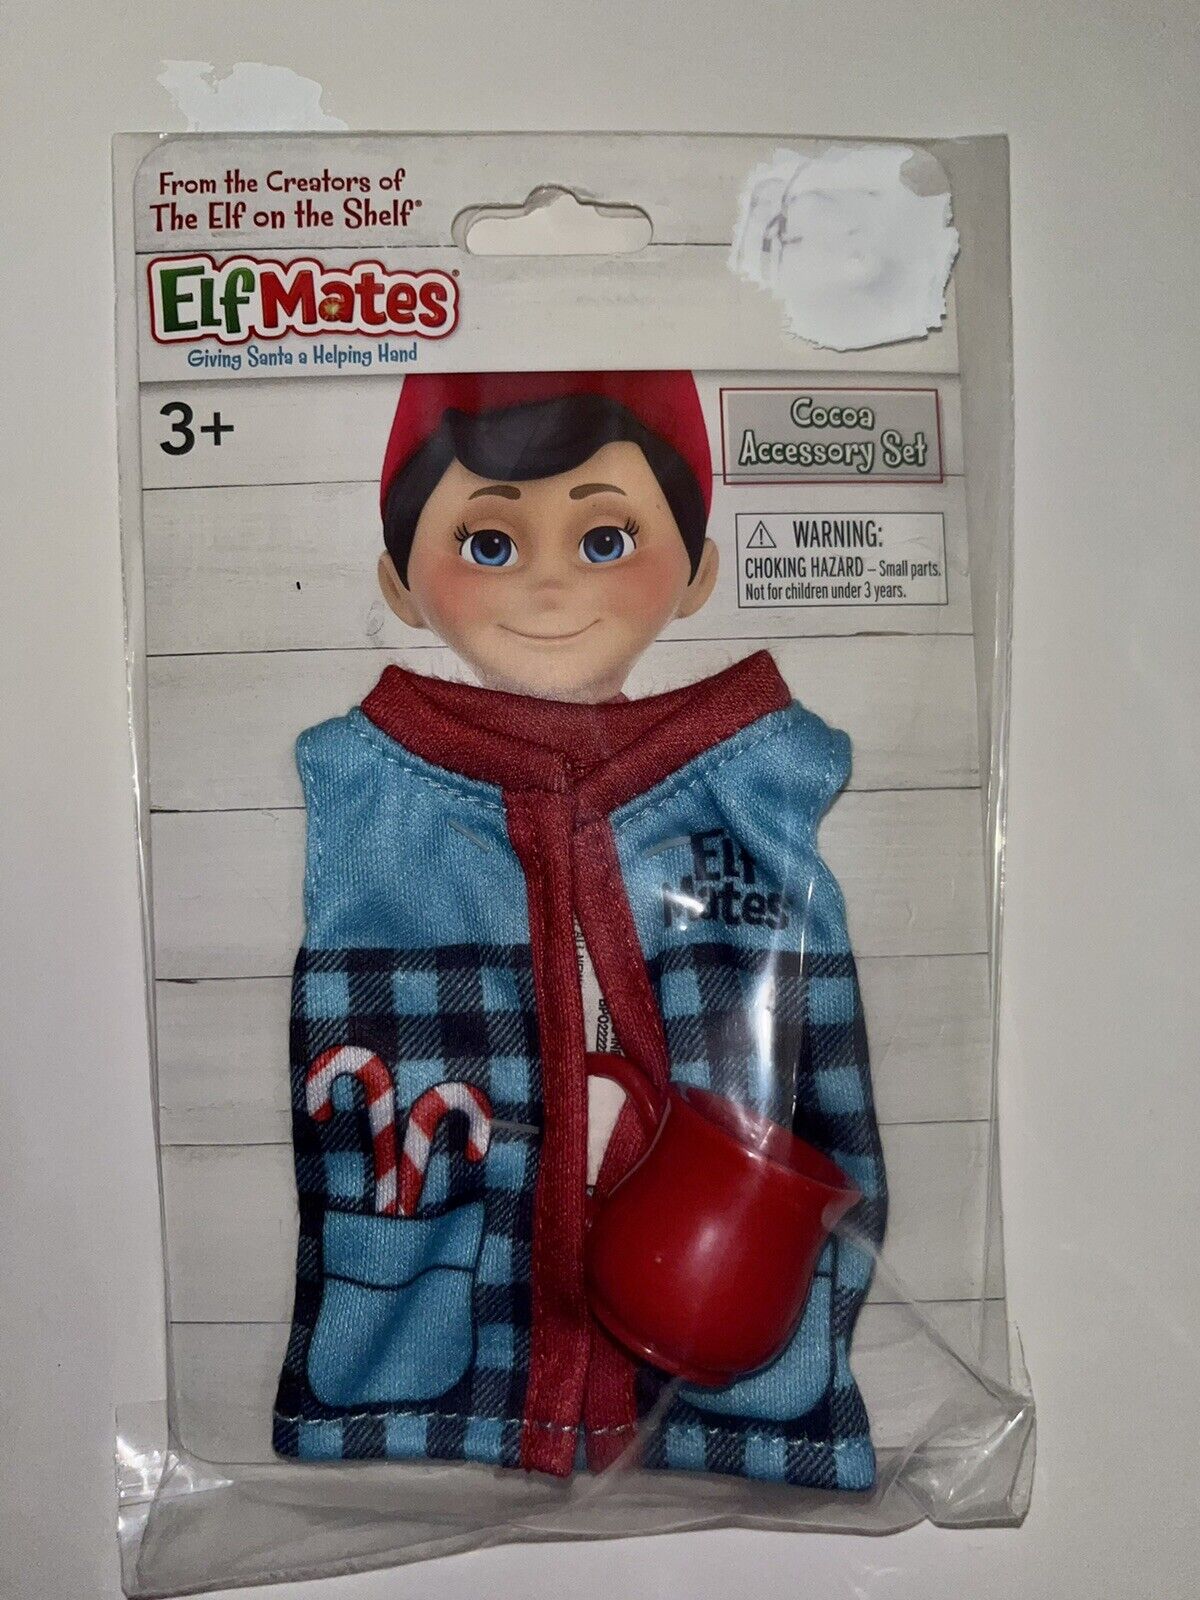 ☆☆ NEW Elf on the Shelf Elf Mates Cocoa Accessory Set Christmas Fun ☆☆